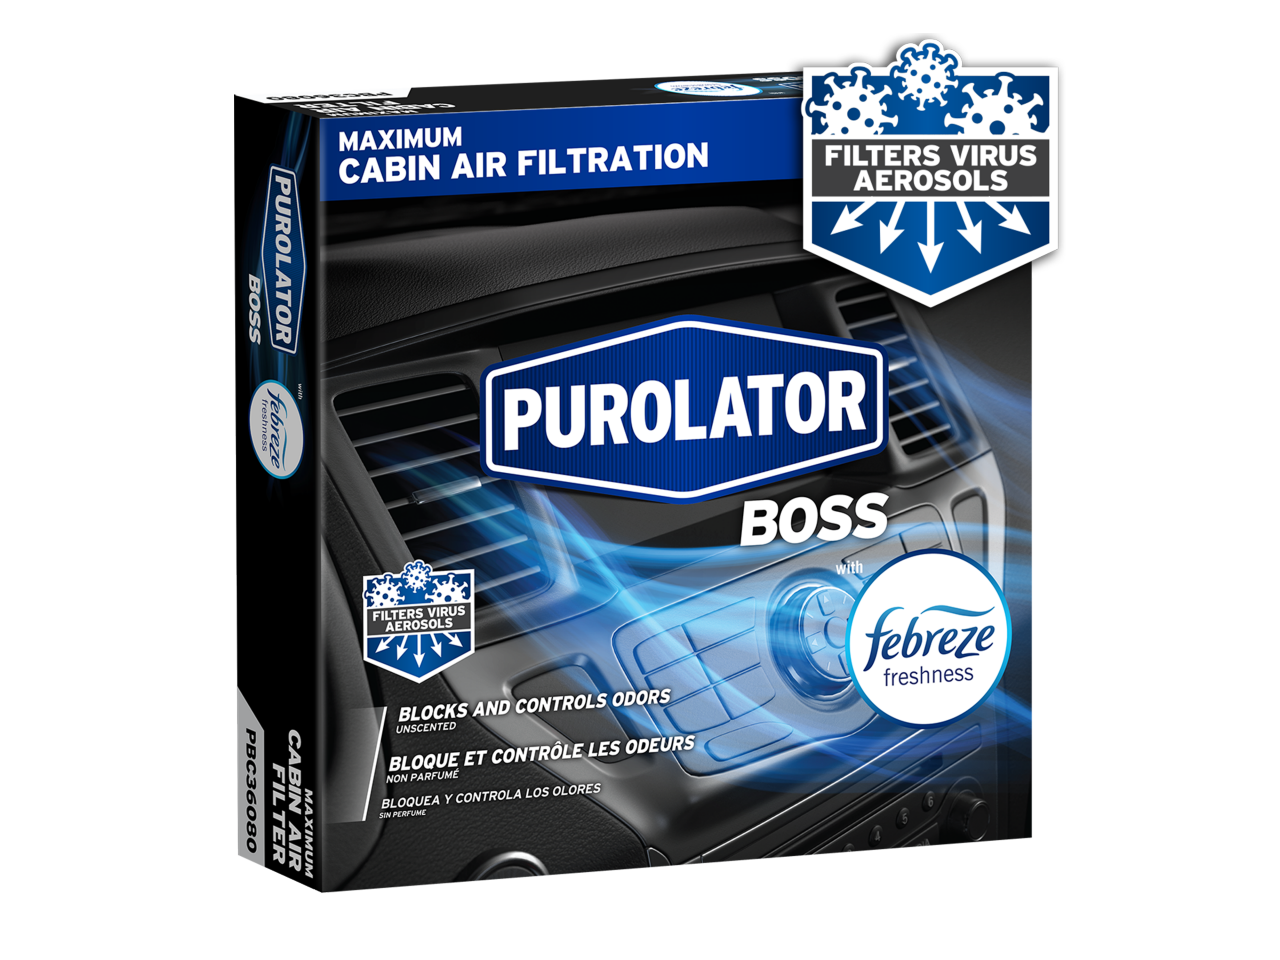 Purolator Cabin Air Filters